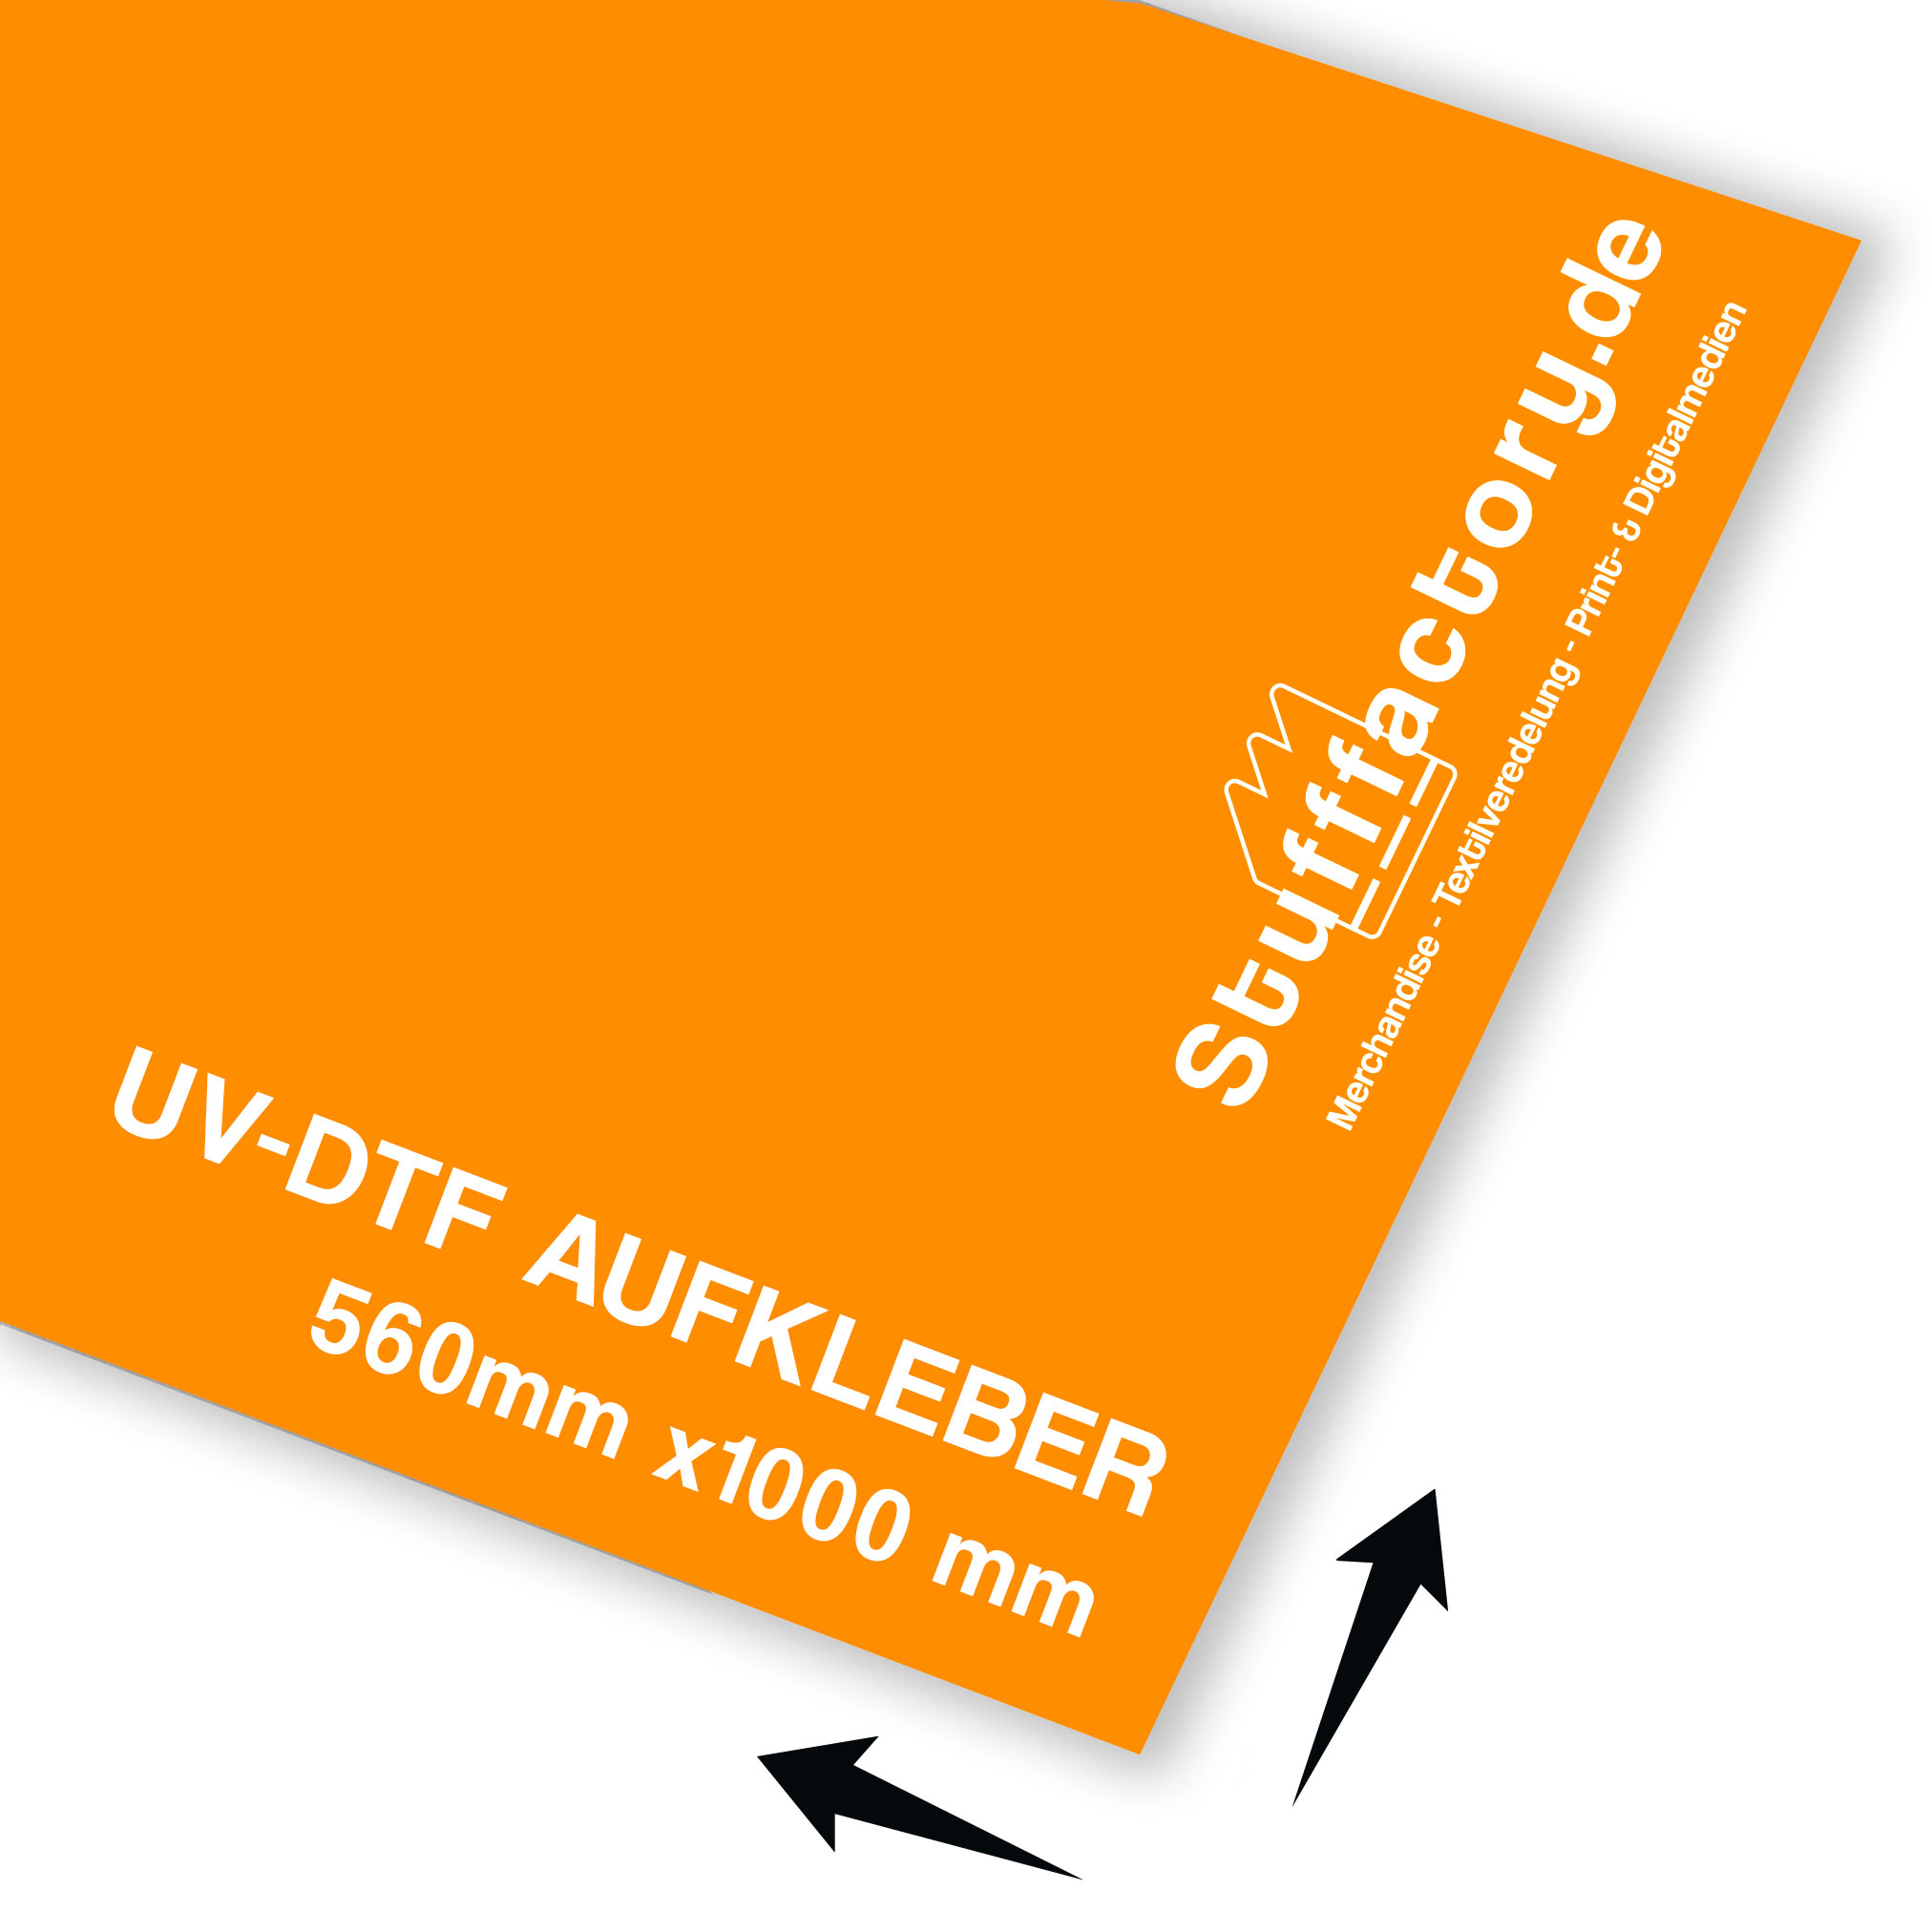 UV-DTF Transfer 560 x 500 mm - Sticker / Aufkleber